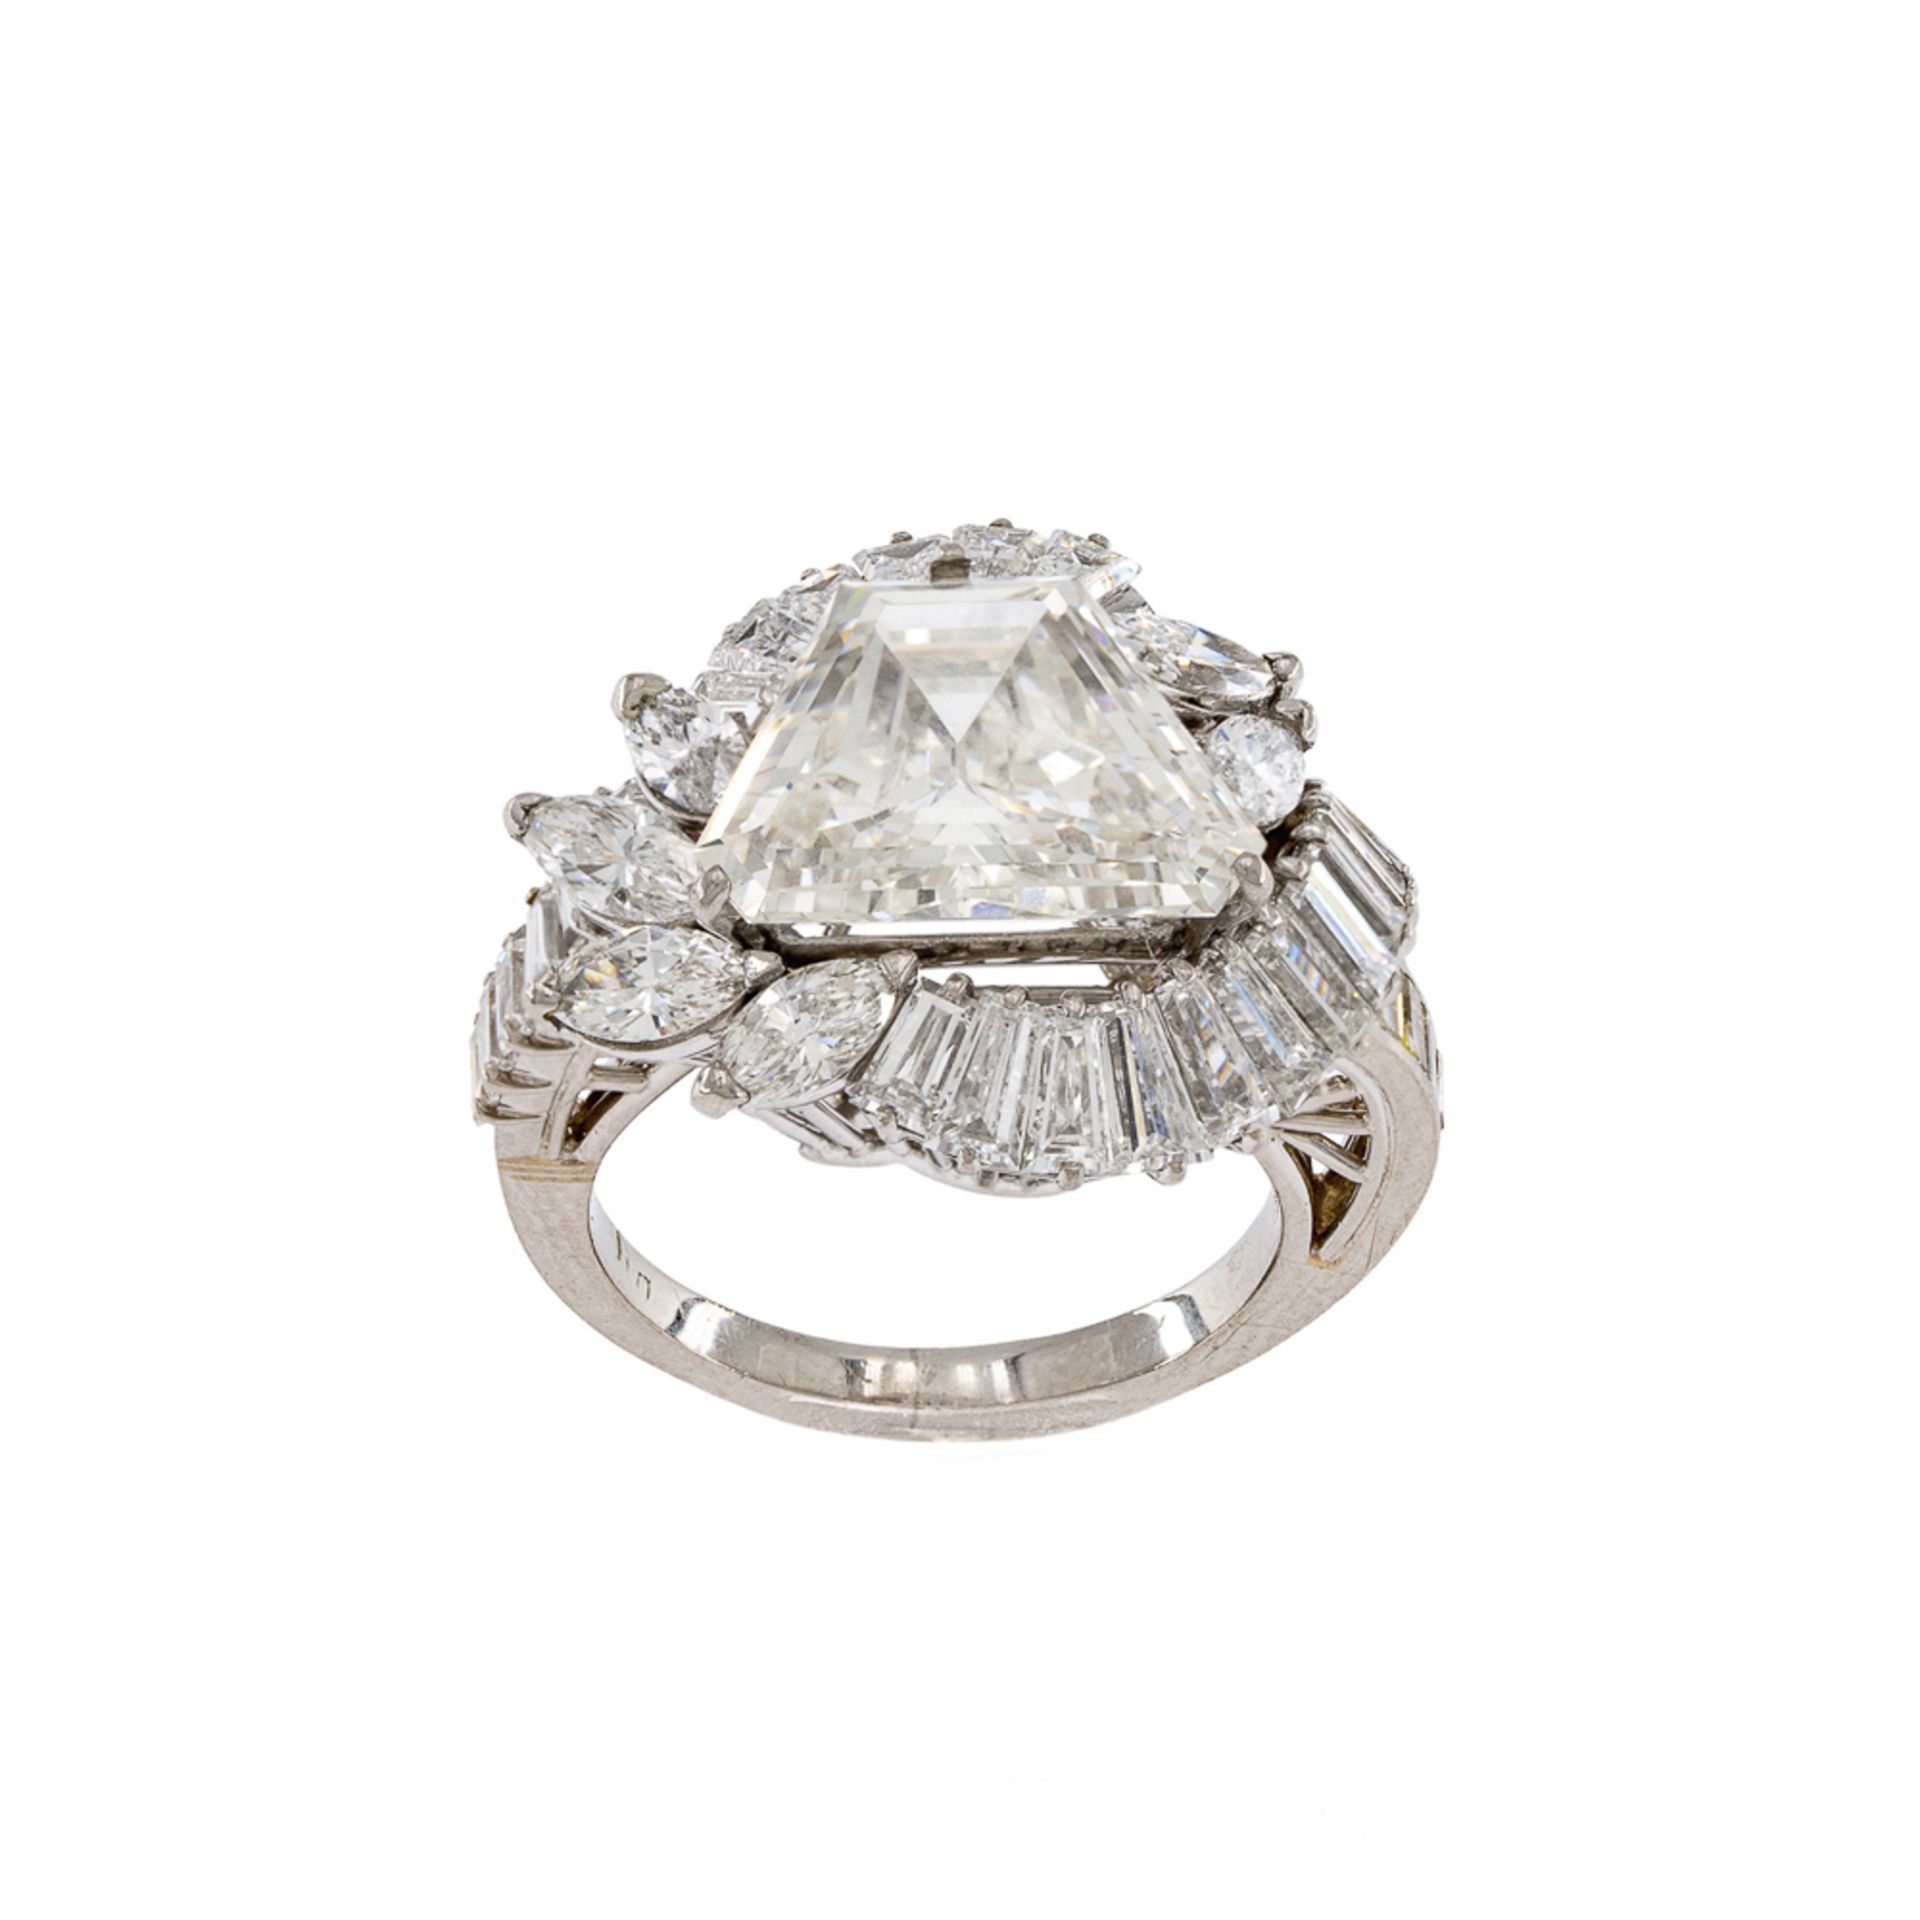 Ring with a triangular diamond with cut off corners 4.38 ctcorners 4.38 ct